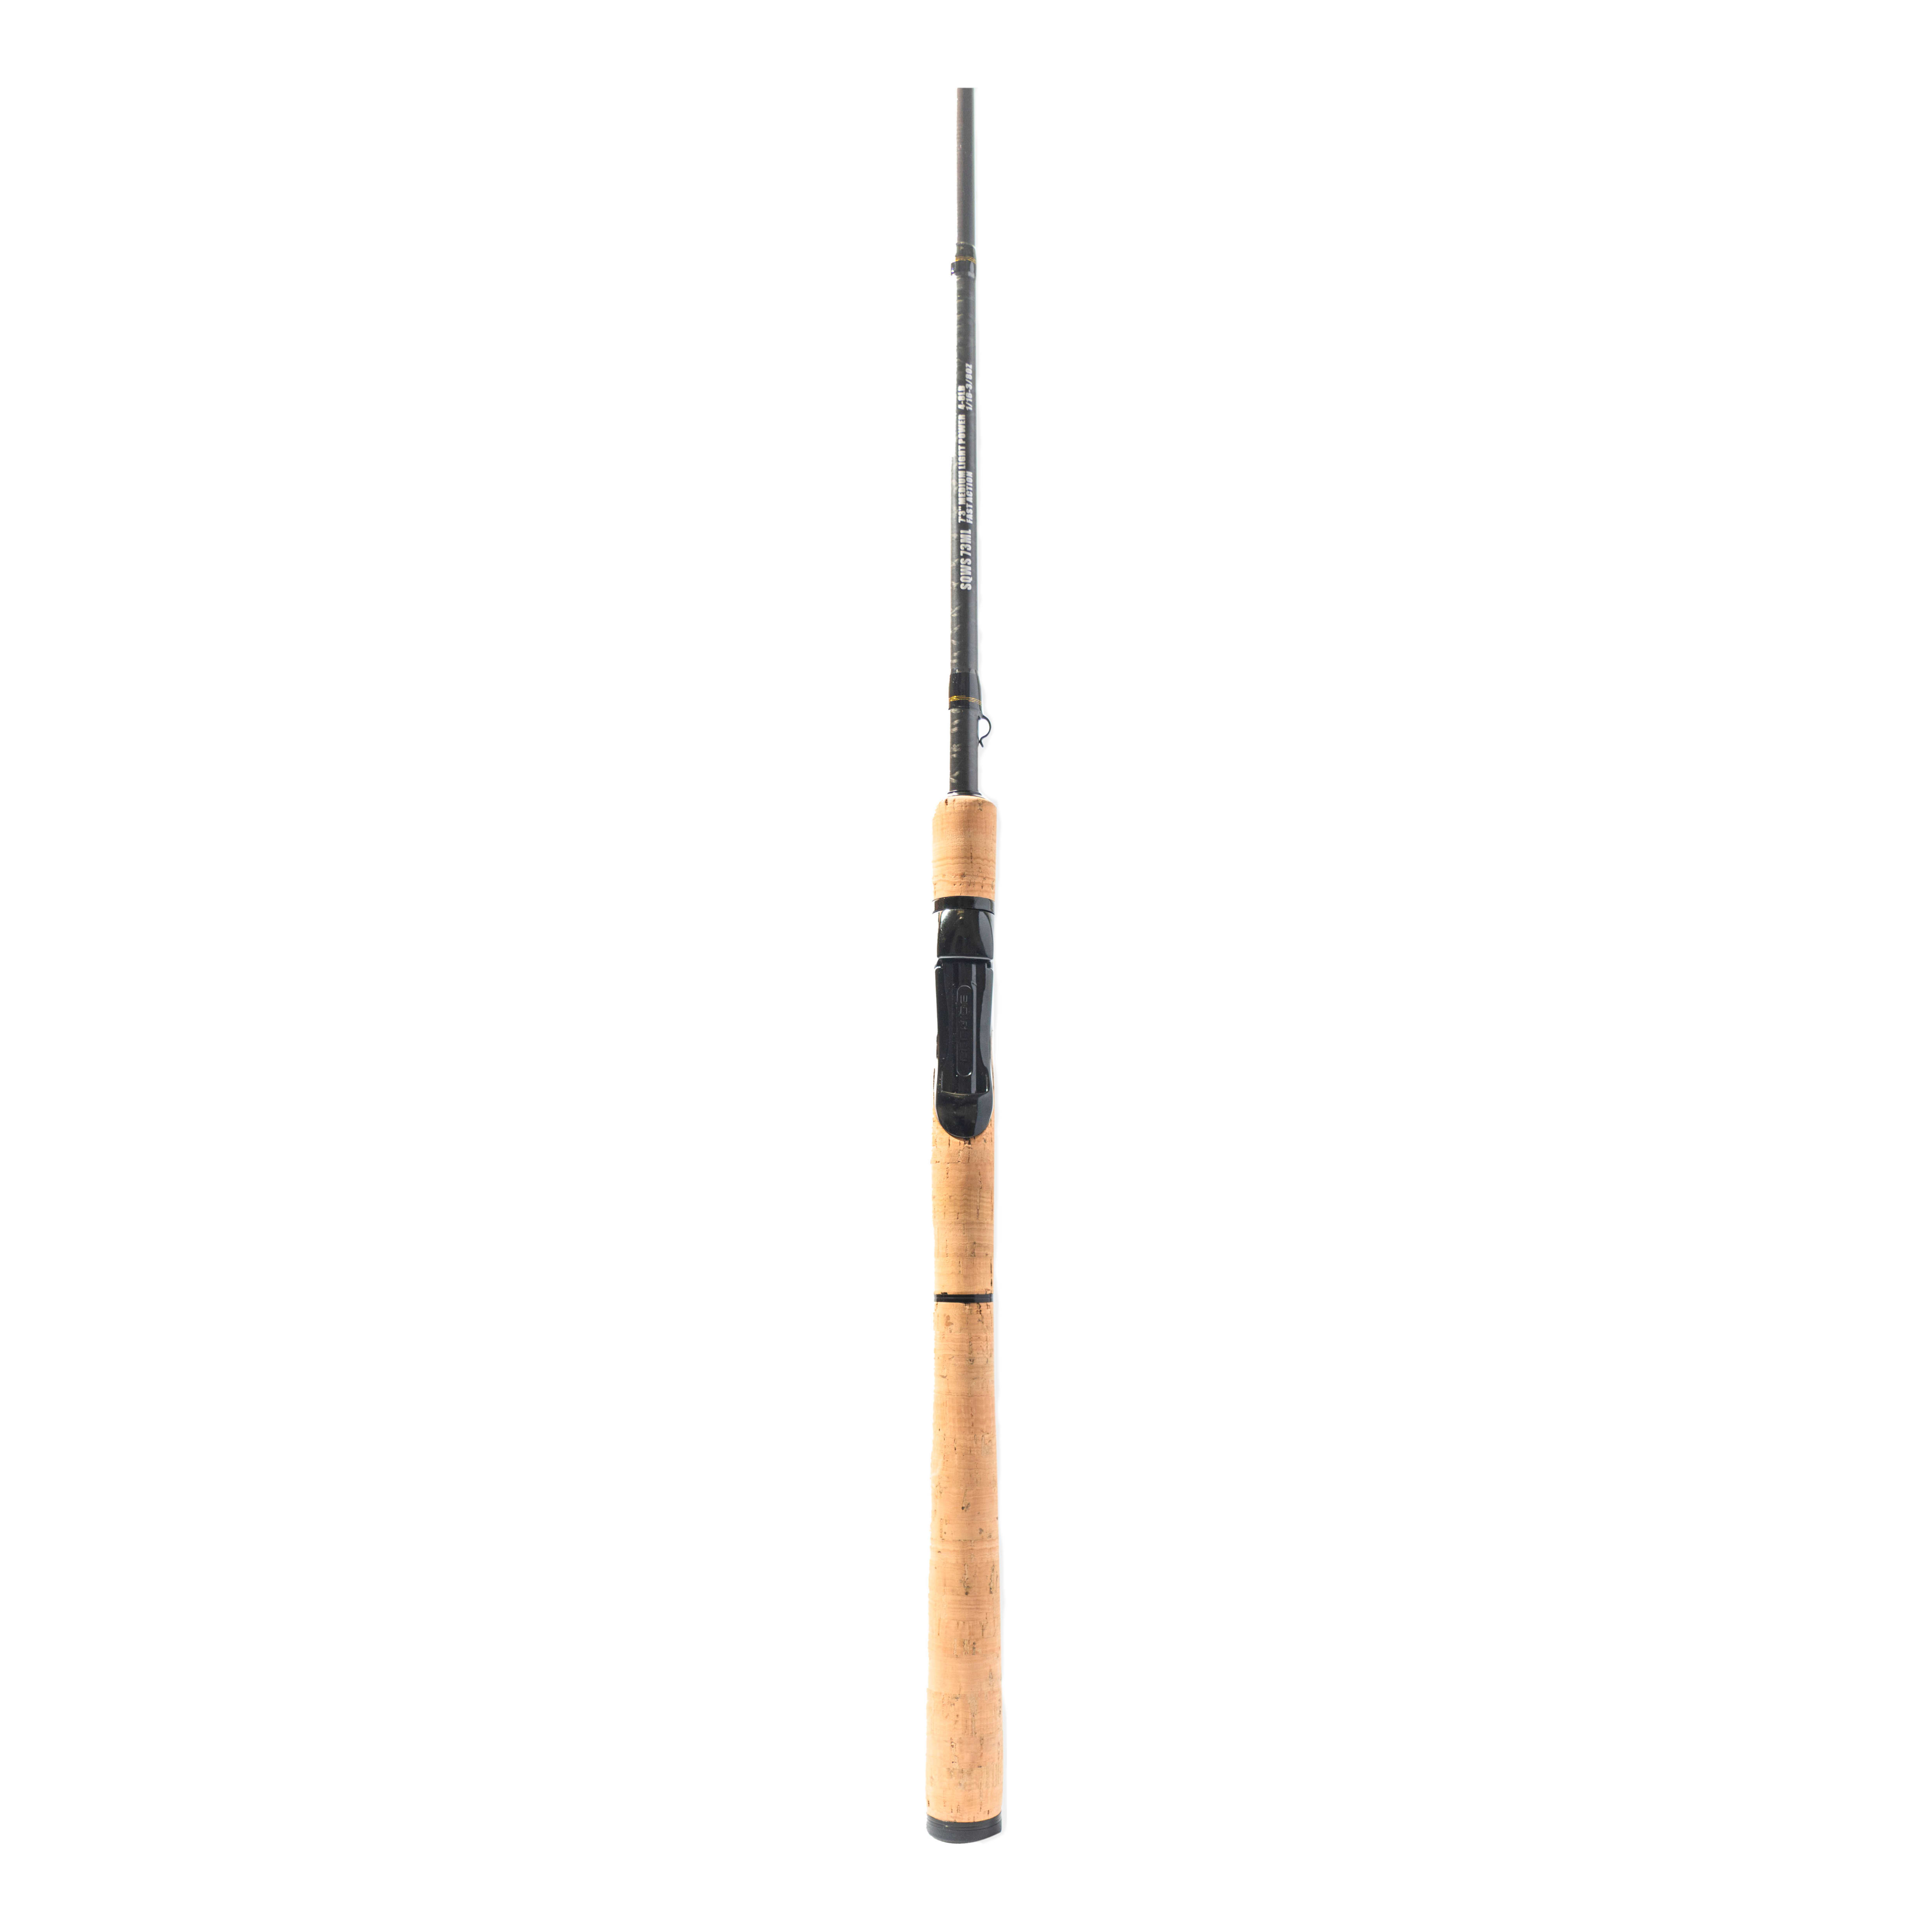 Berkley Glowstik Spinning Rod 8 Length, 2 Piece Rod, 12-30 lb Line